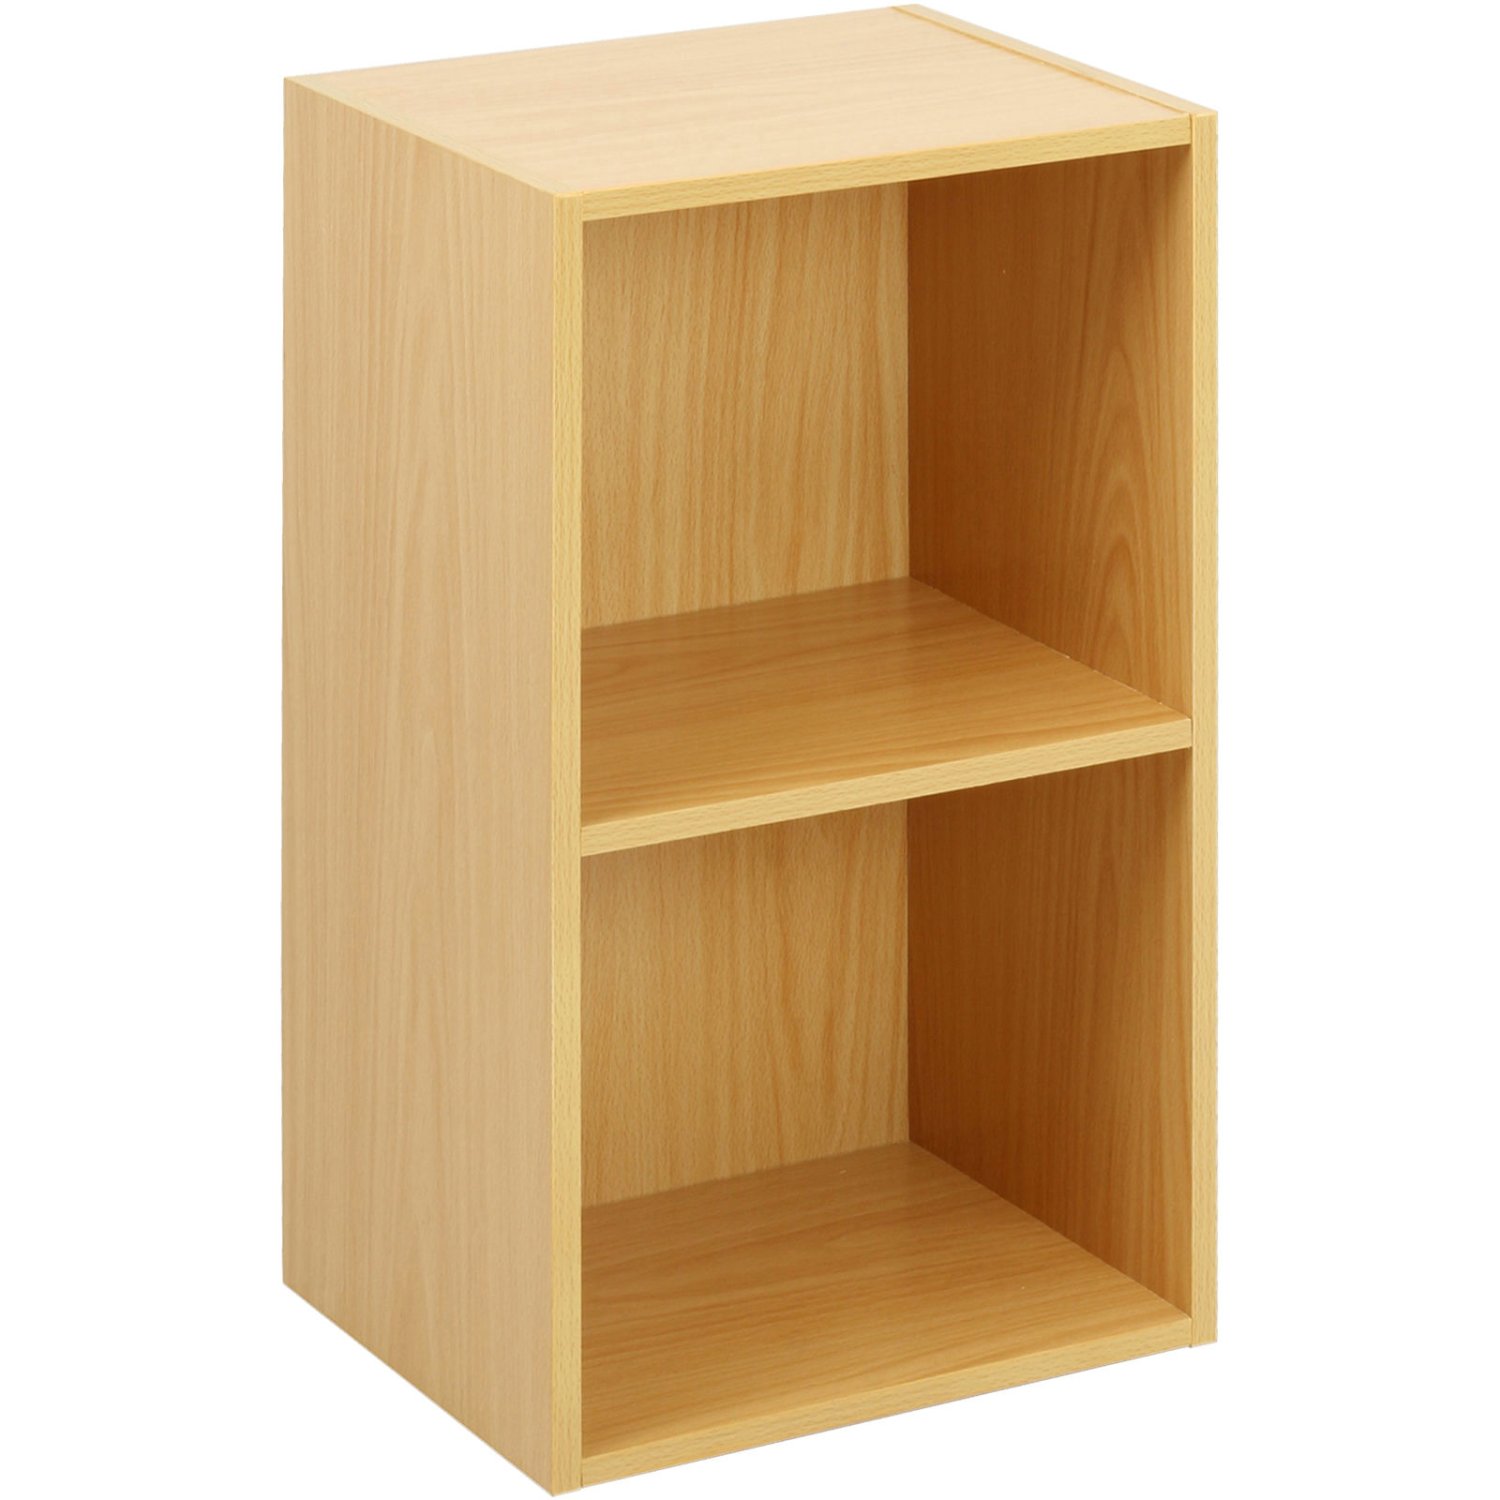 2 Tier Wooden Shelf Beech Bookcase Shelving Storage Display Rack